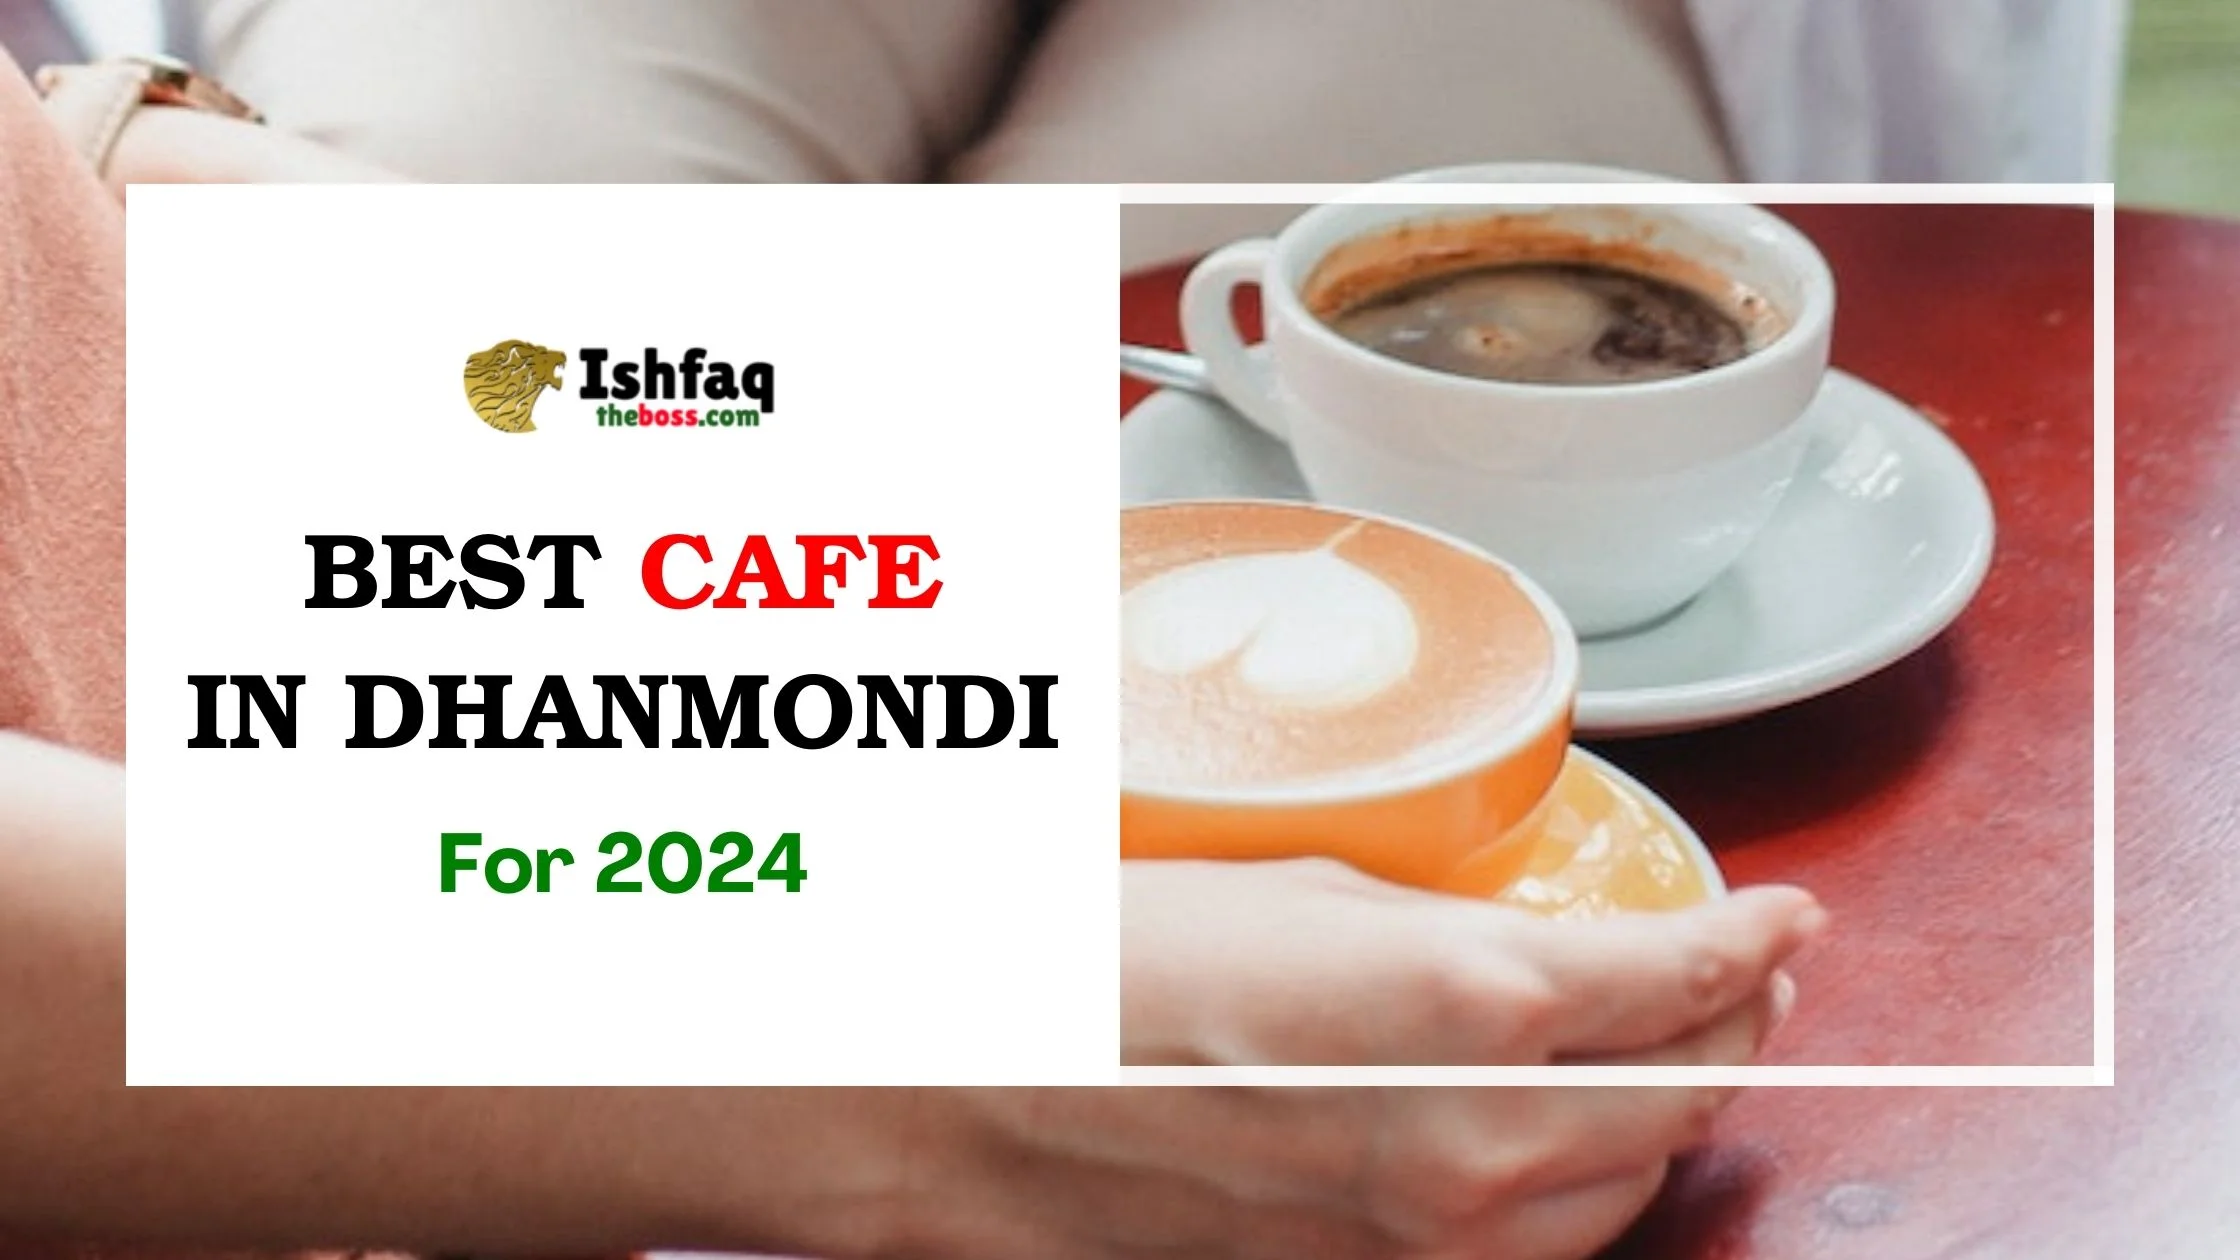 Best Cafe in Dhanmondi for 2024